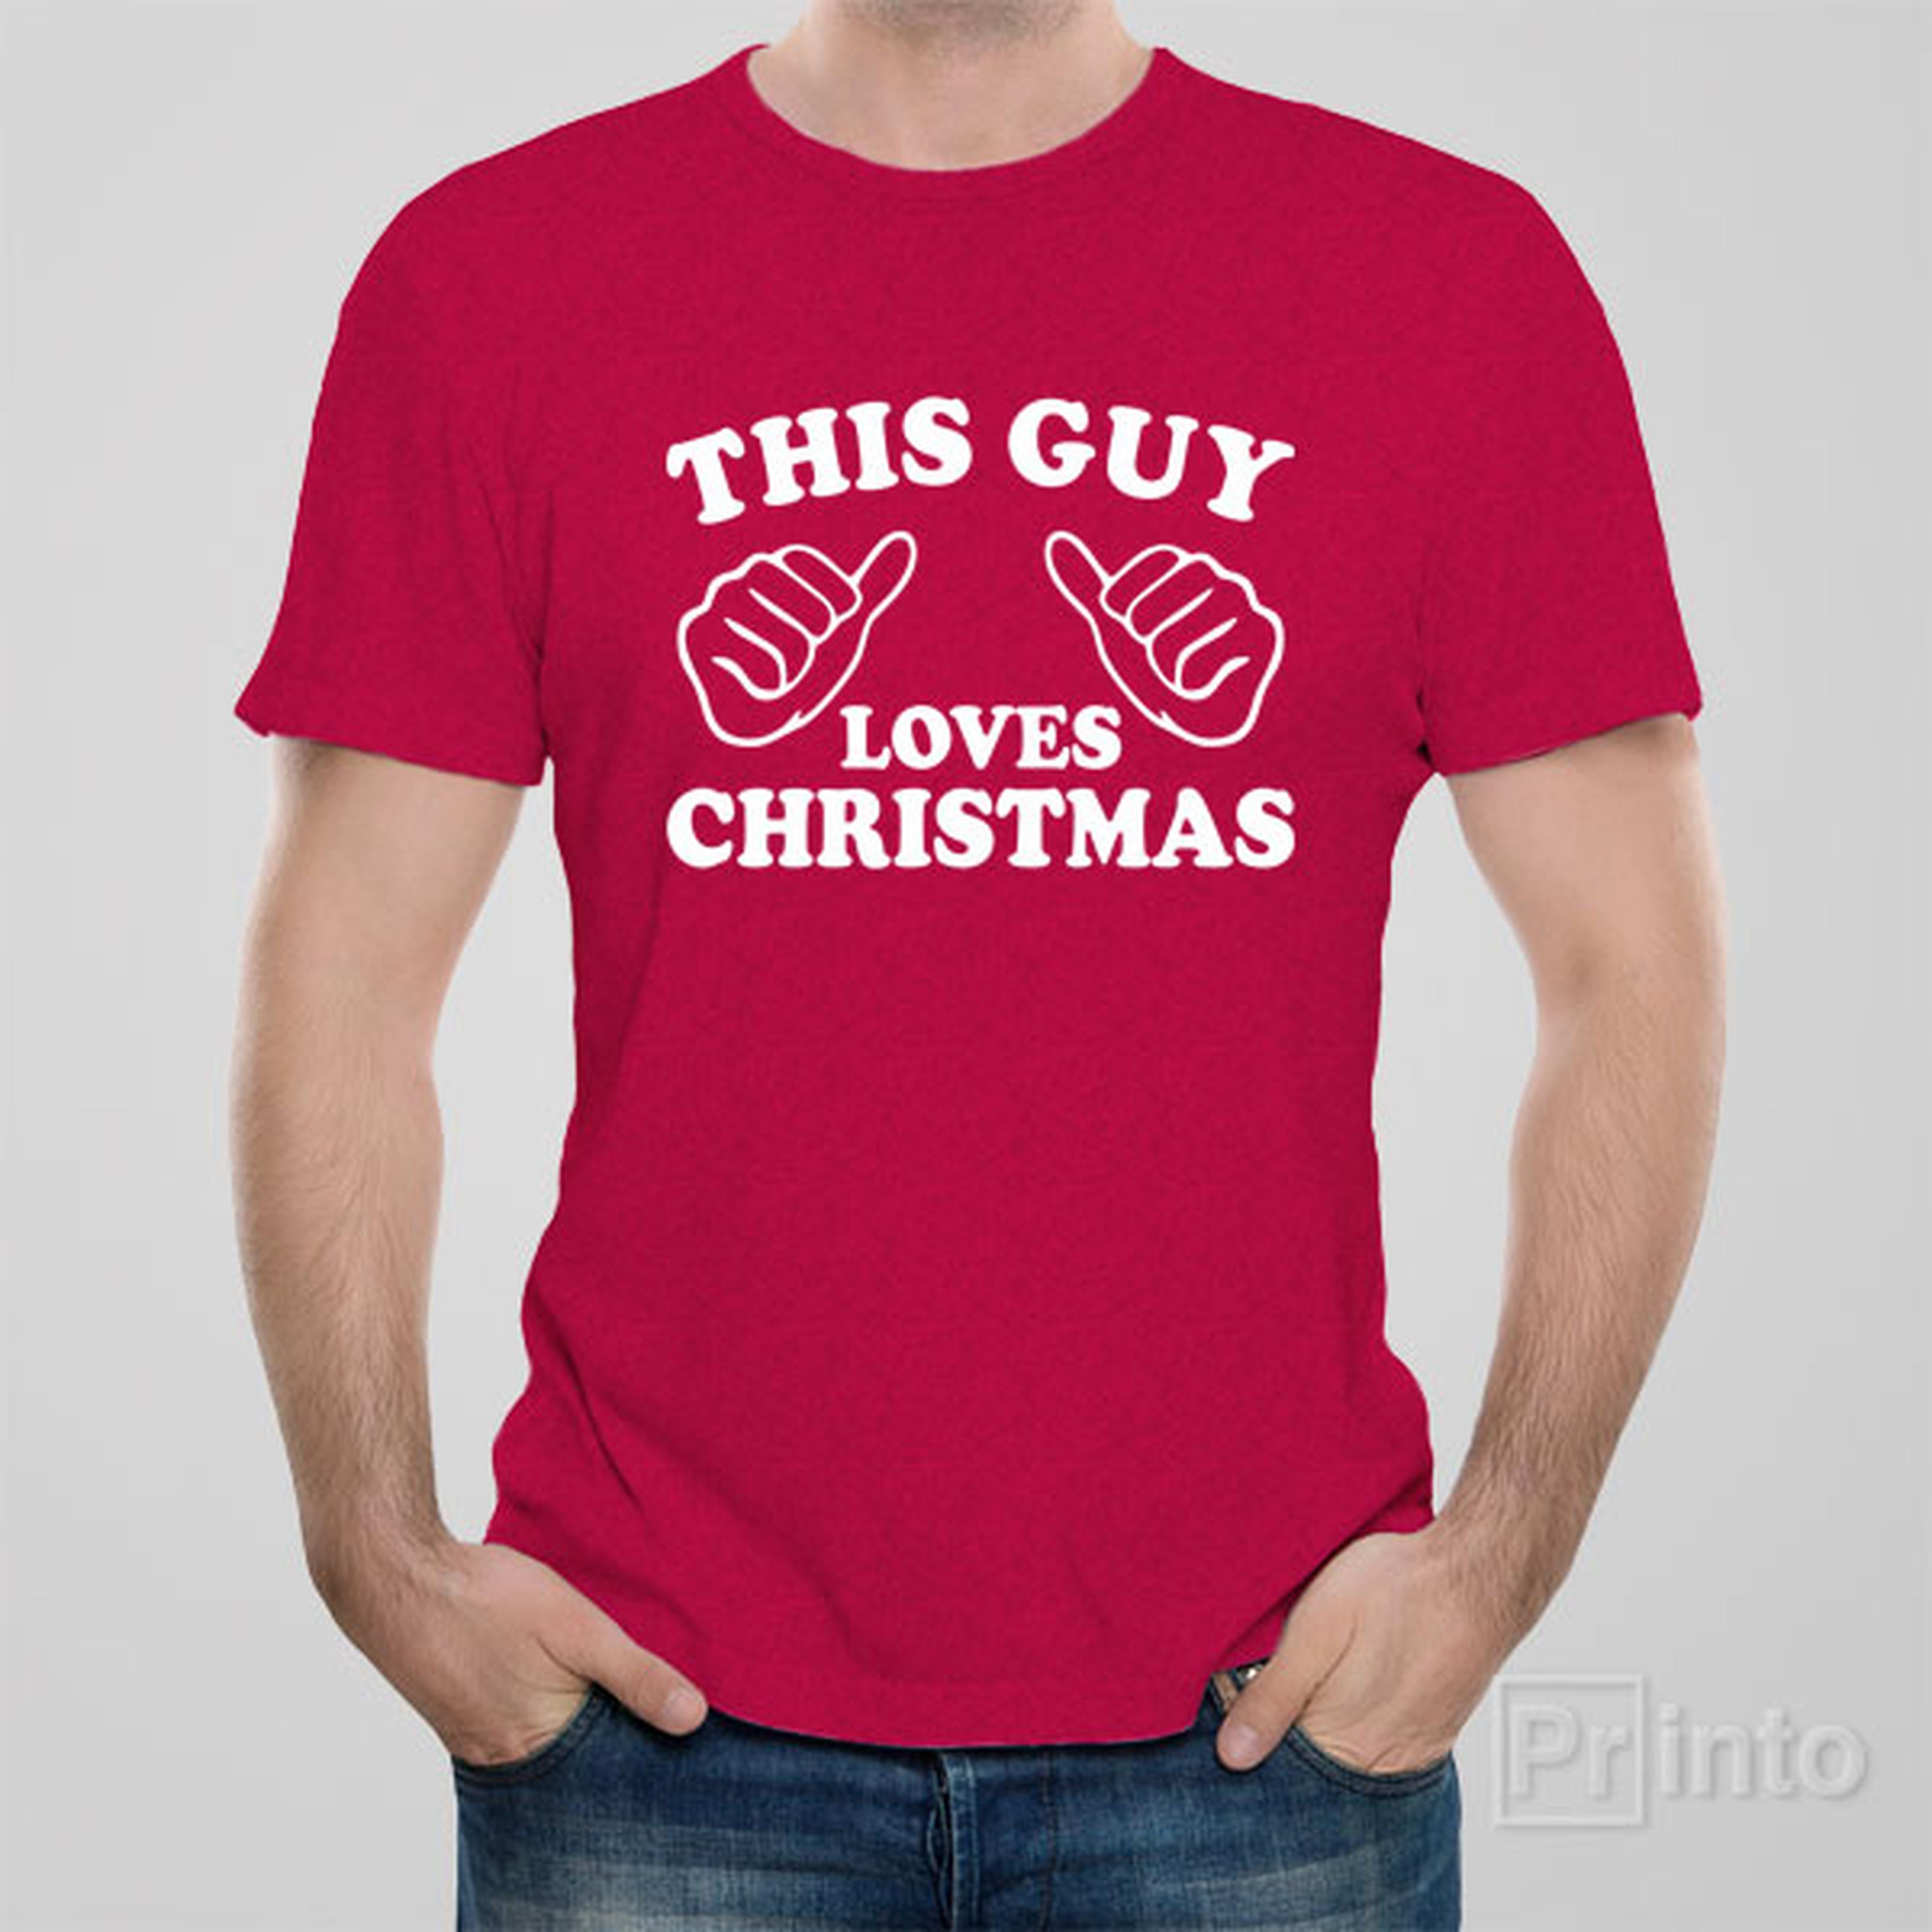 this-guy-loves-christmas-t-shirt